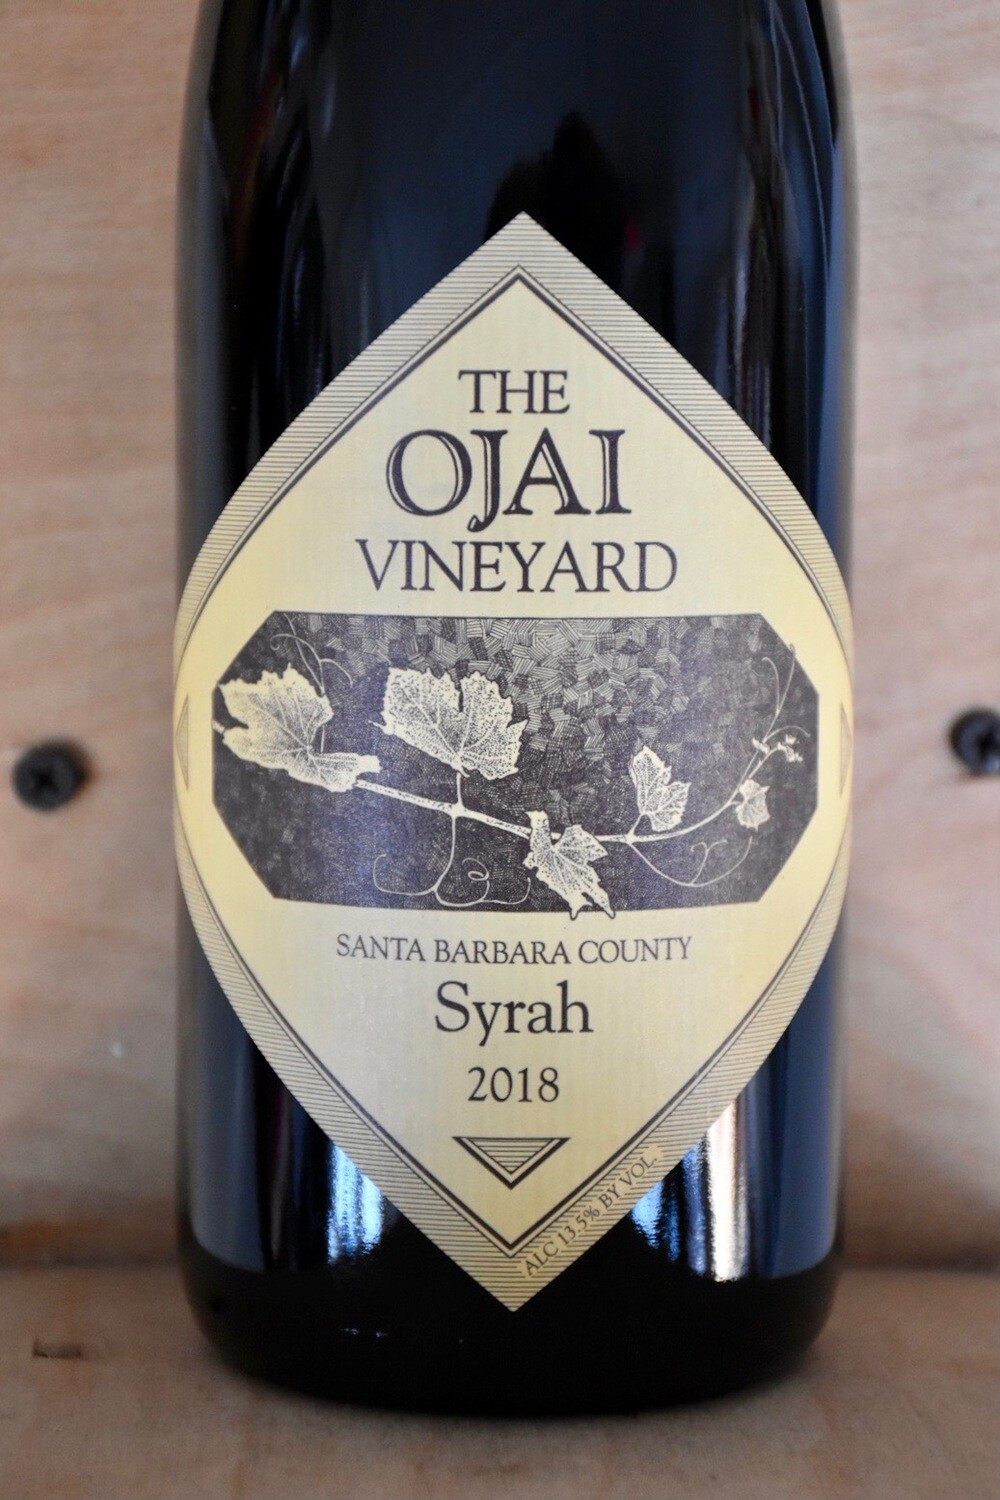 The Ojai Vineyard Santa Barbara County Syrah